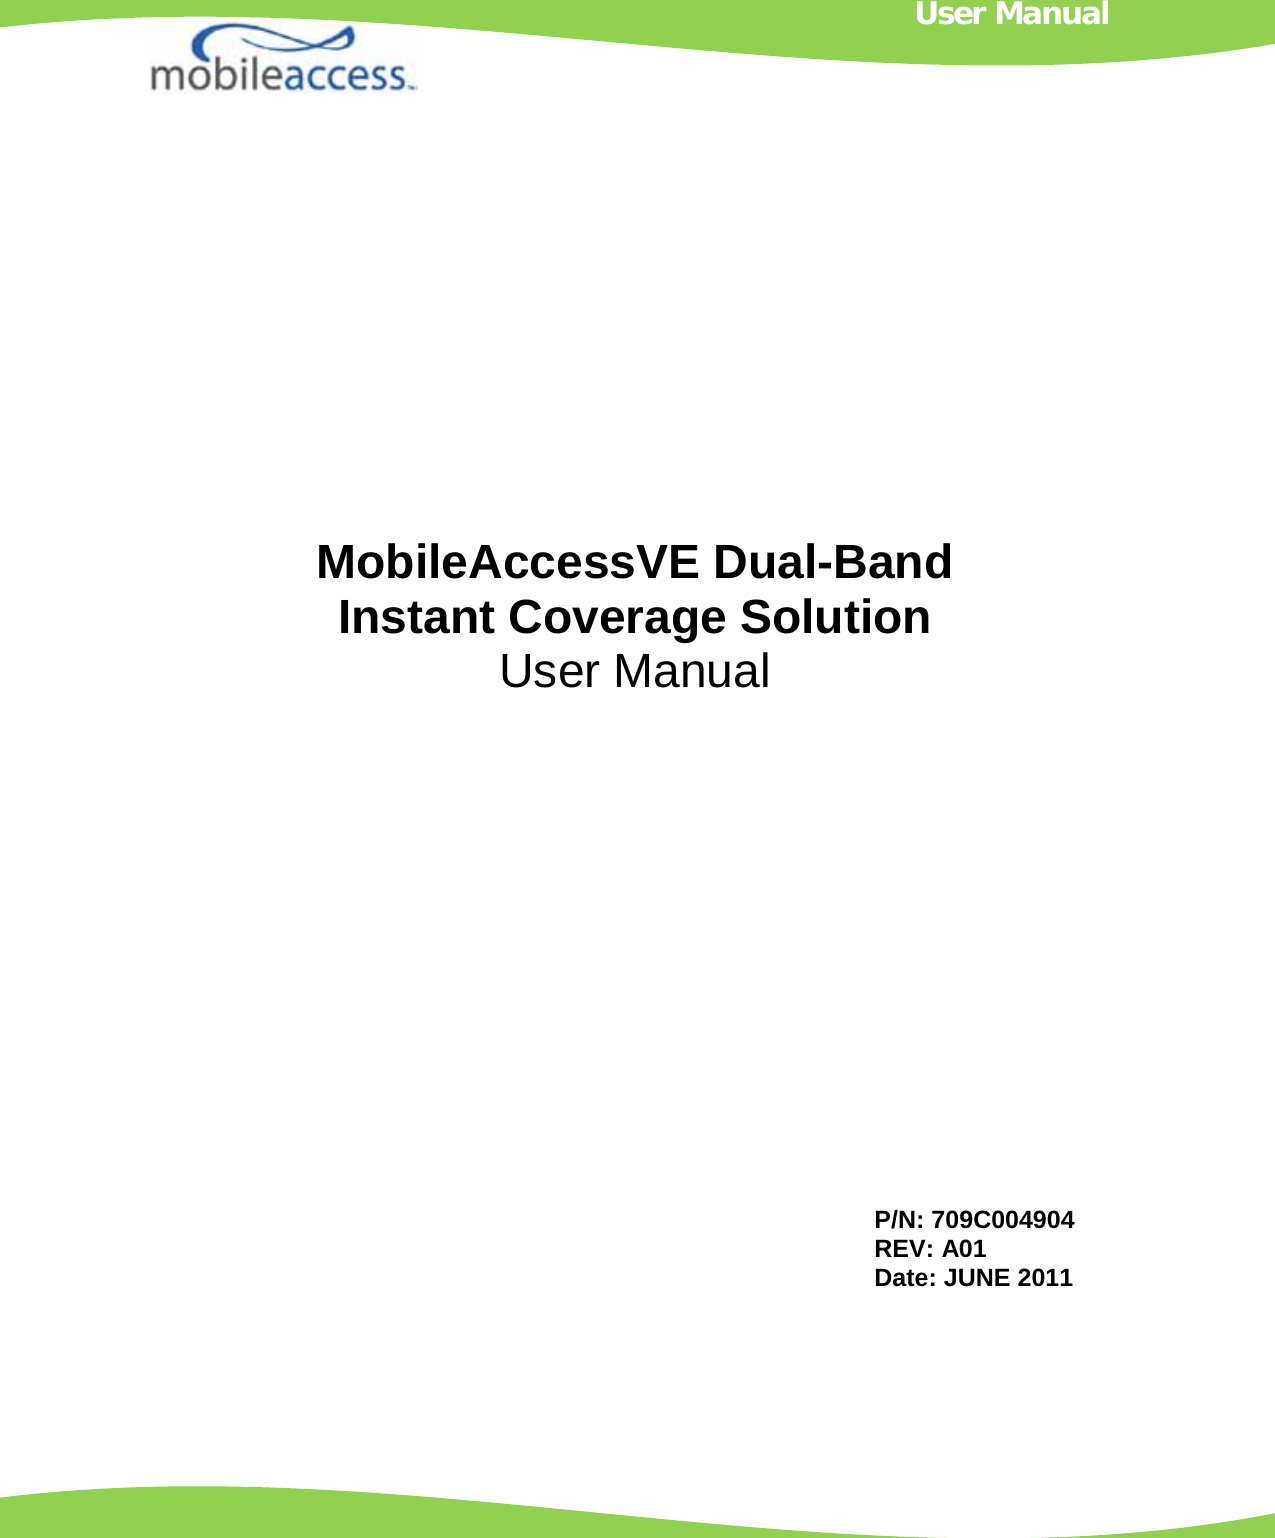                           MobileAccessVE Dual-Band Instant Coverage Solution User Manual P/N: 709C004904 REV: A01 Date: JUNE 2011 User Manual 